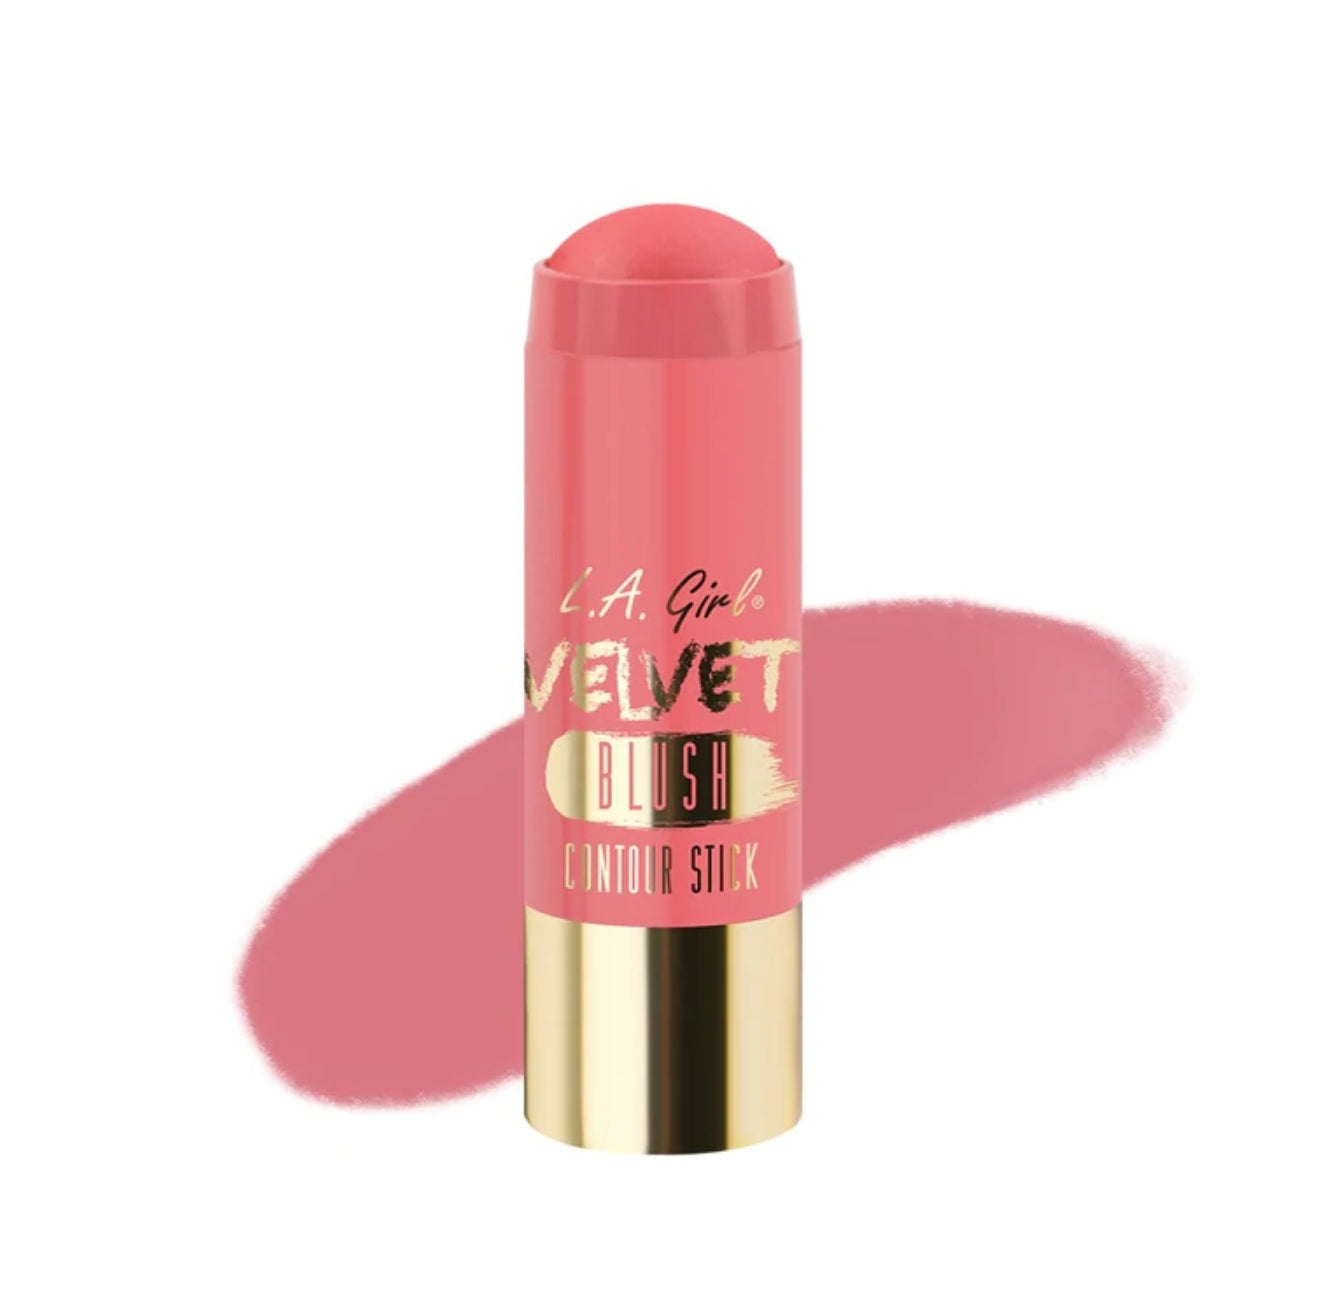 LA GIRL Velvet Blush Contour Stick ستيك متعدد الاستخدام اضاءة كونتور و بلاشر